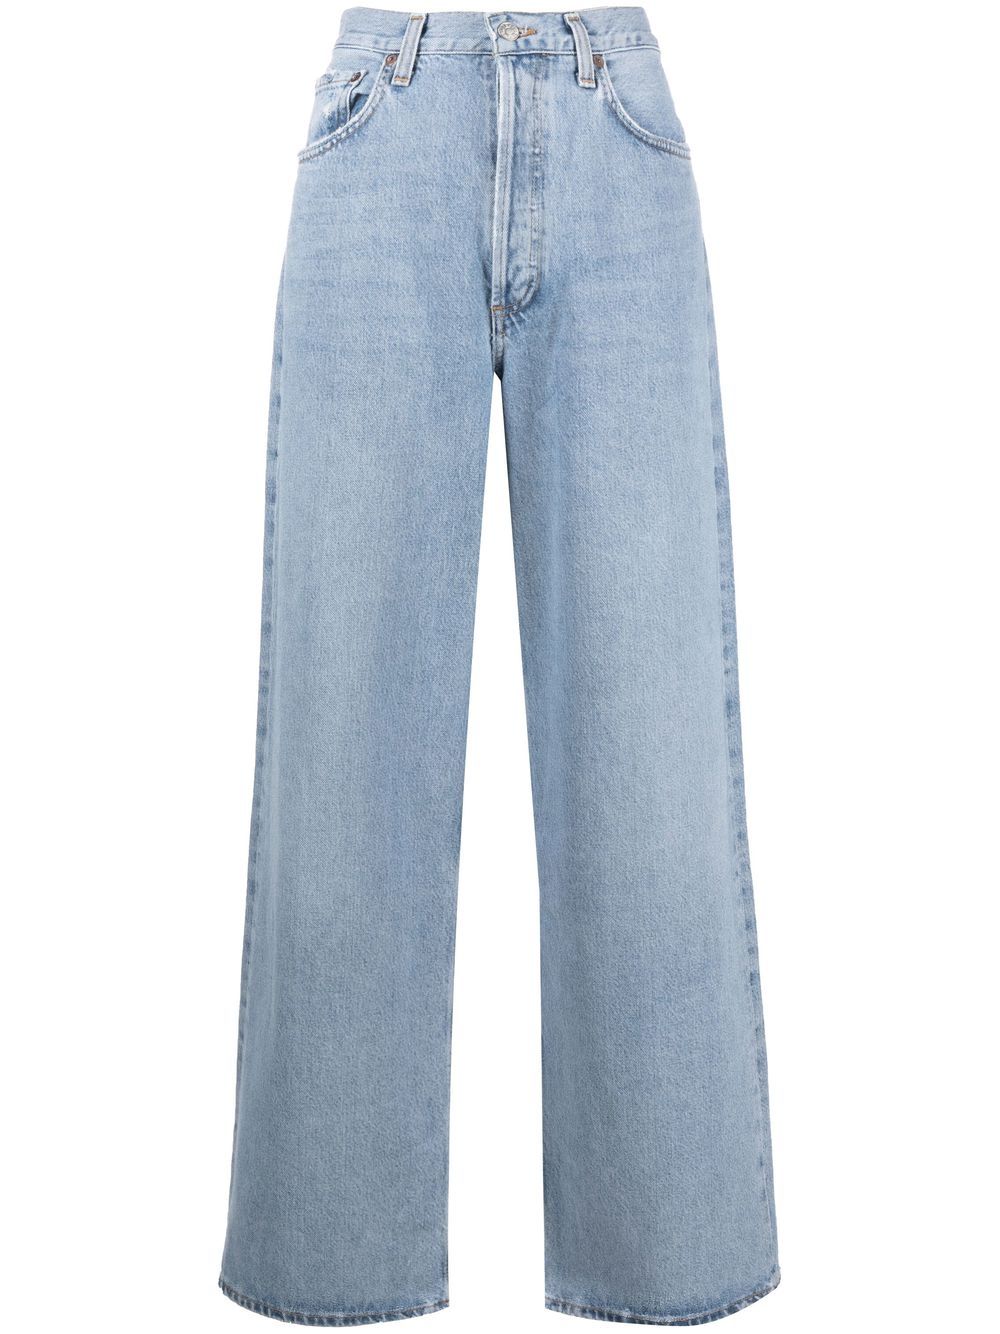 Image 1 of AGOLDE wide-leg stonewashed jeans